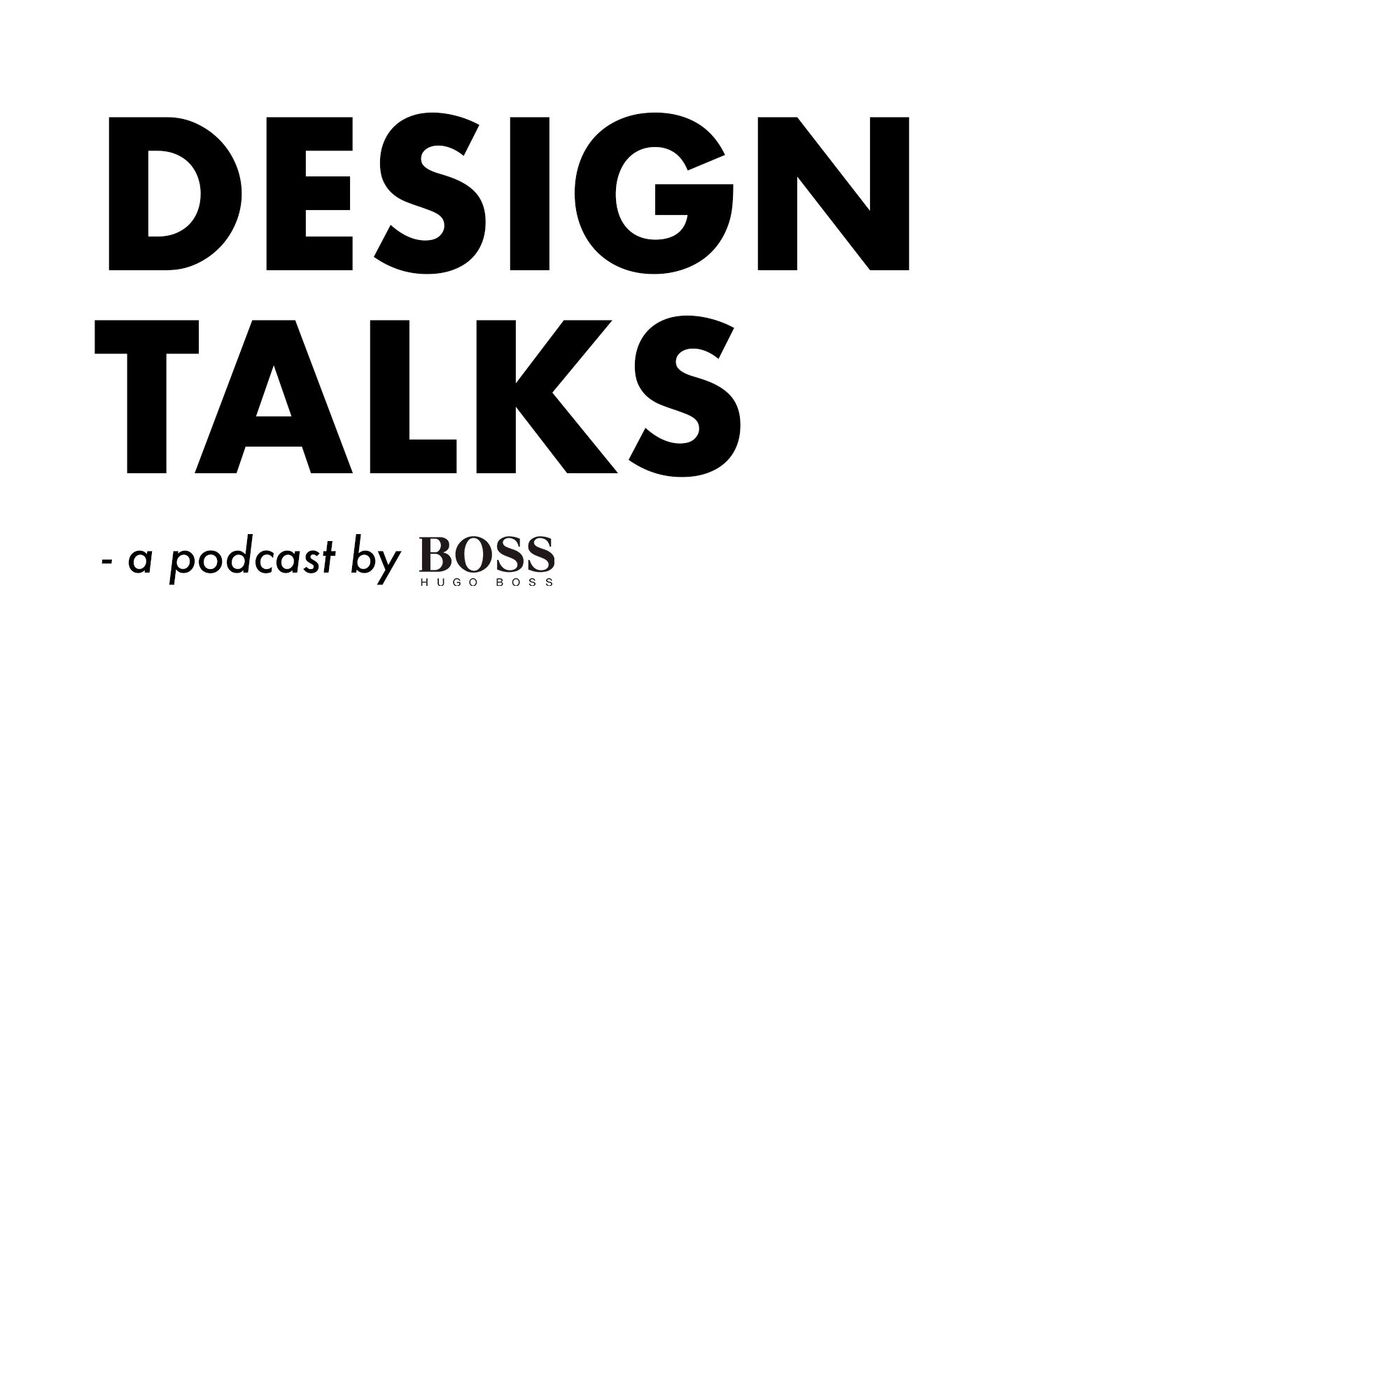 Design Talks by BOSS